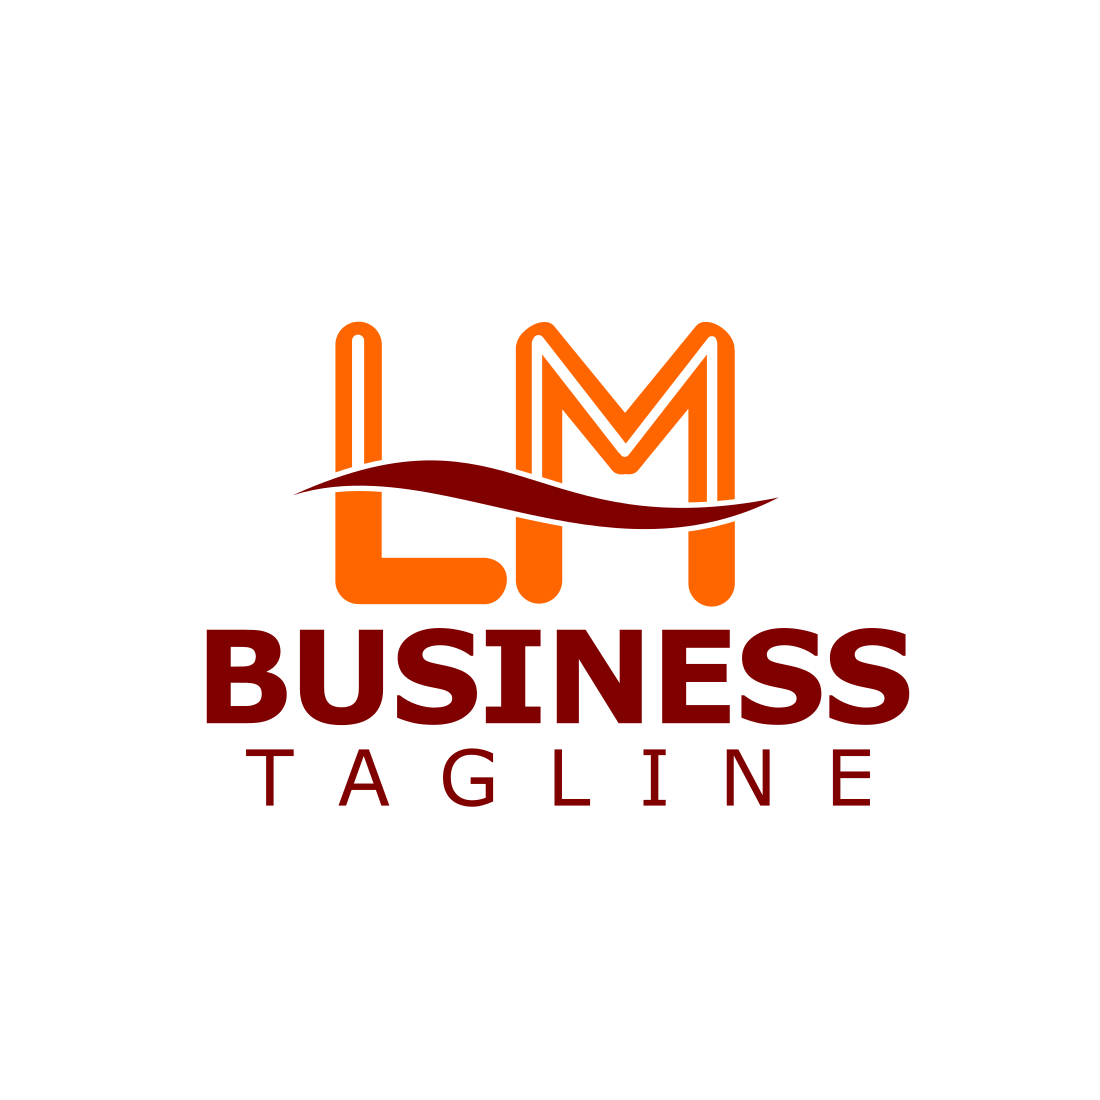 L.M Letter Initials Logo Design Template cover image.